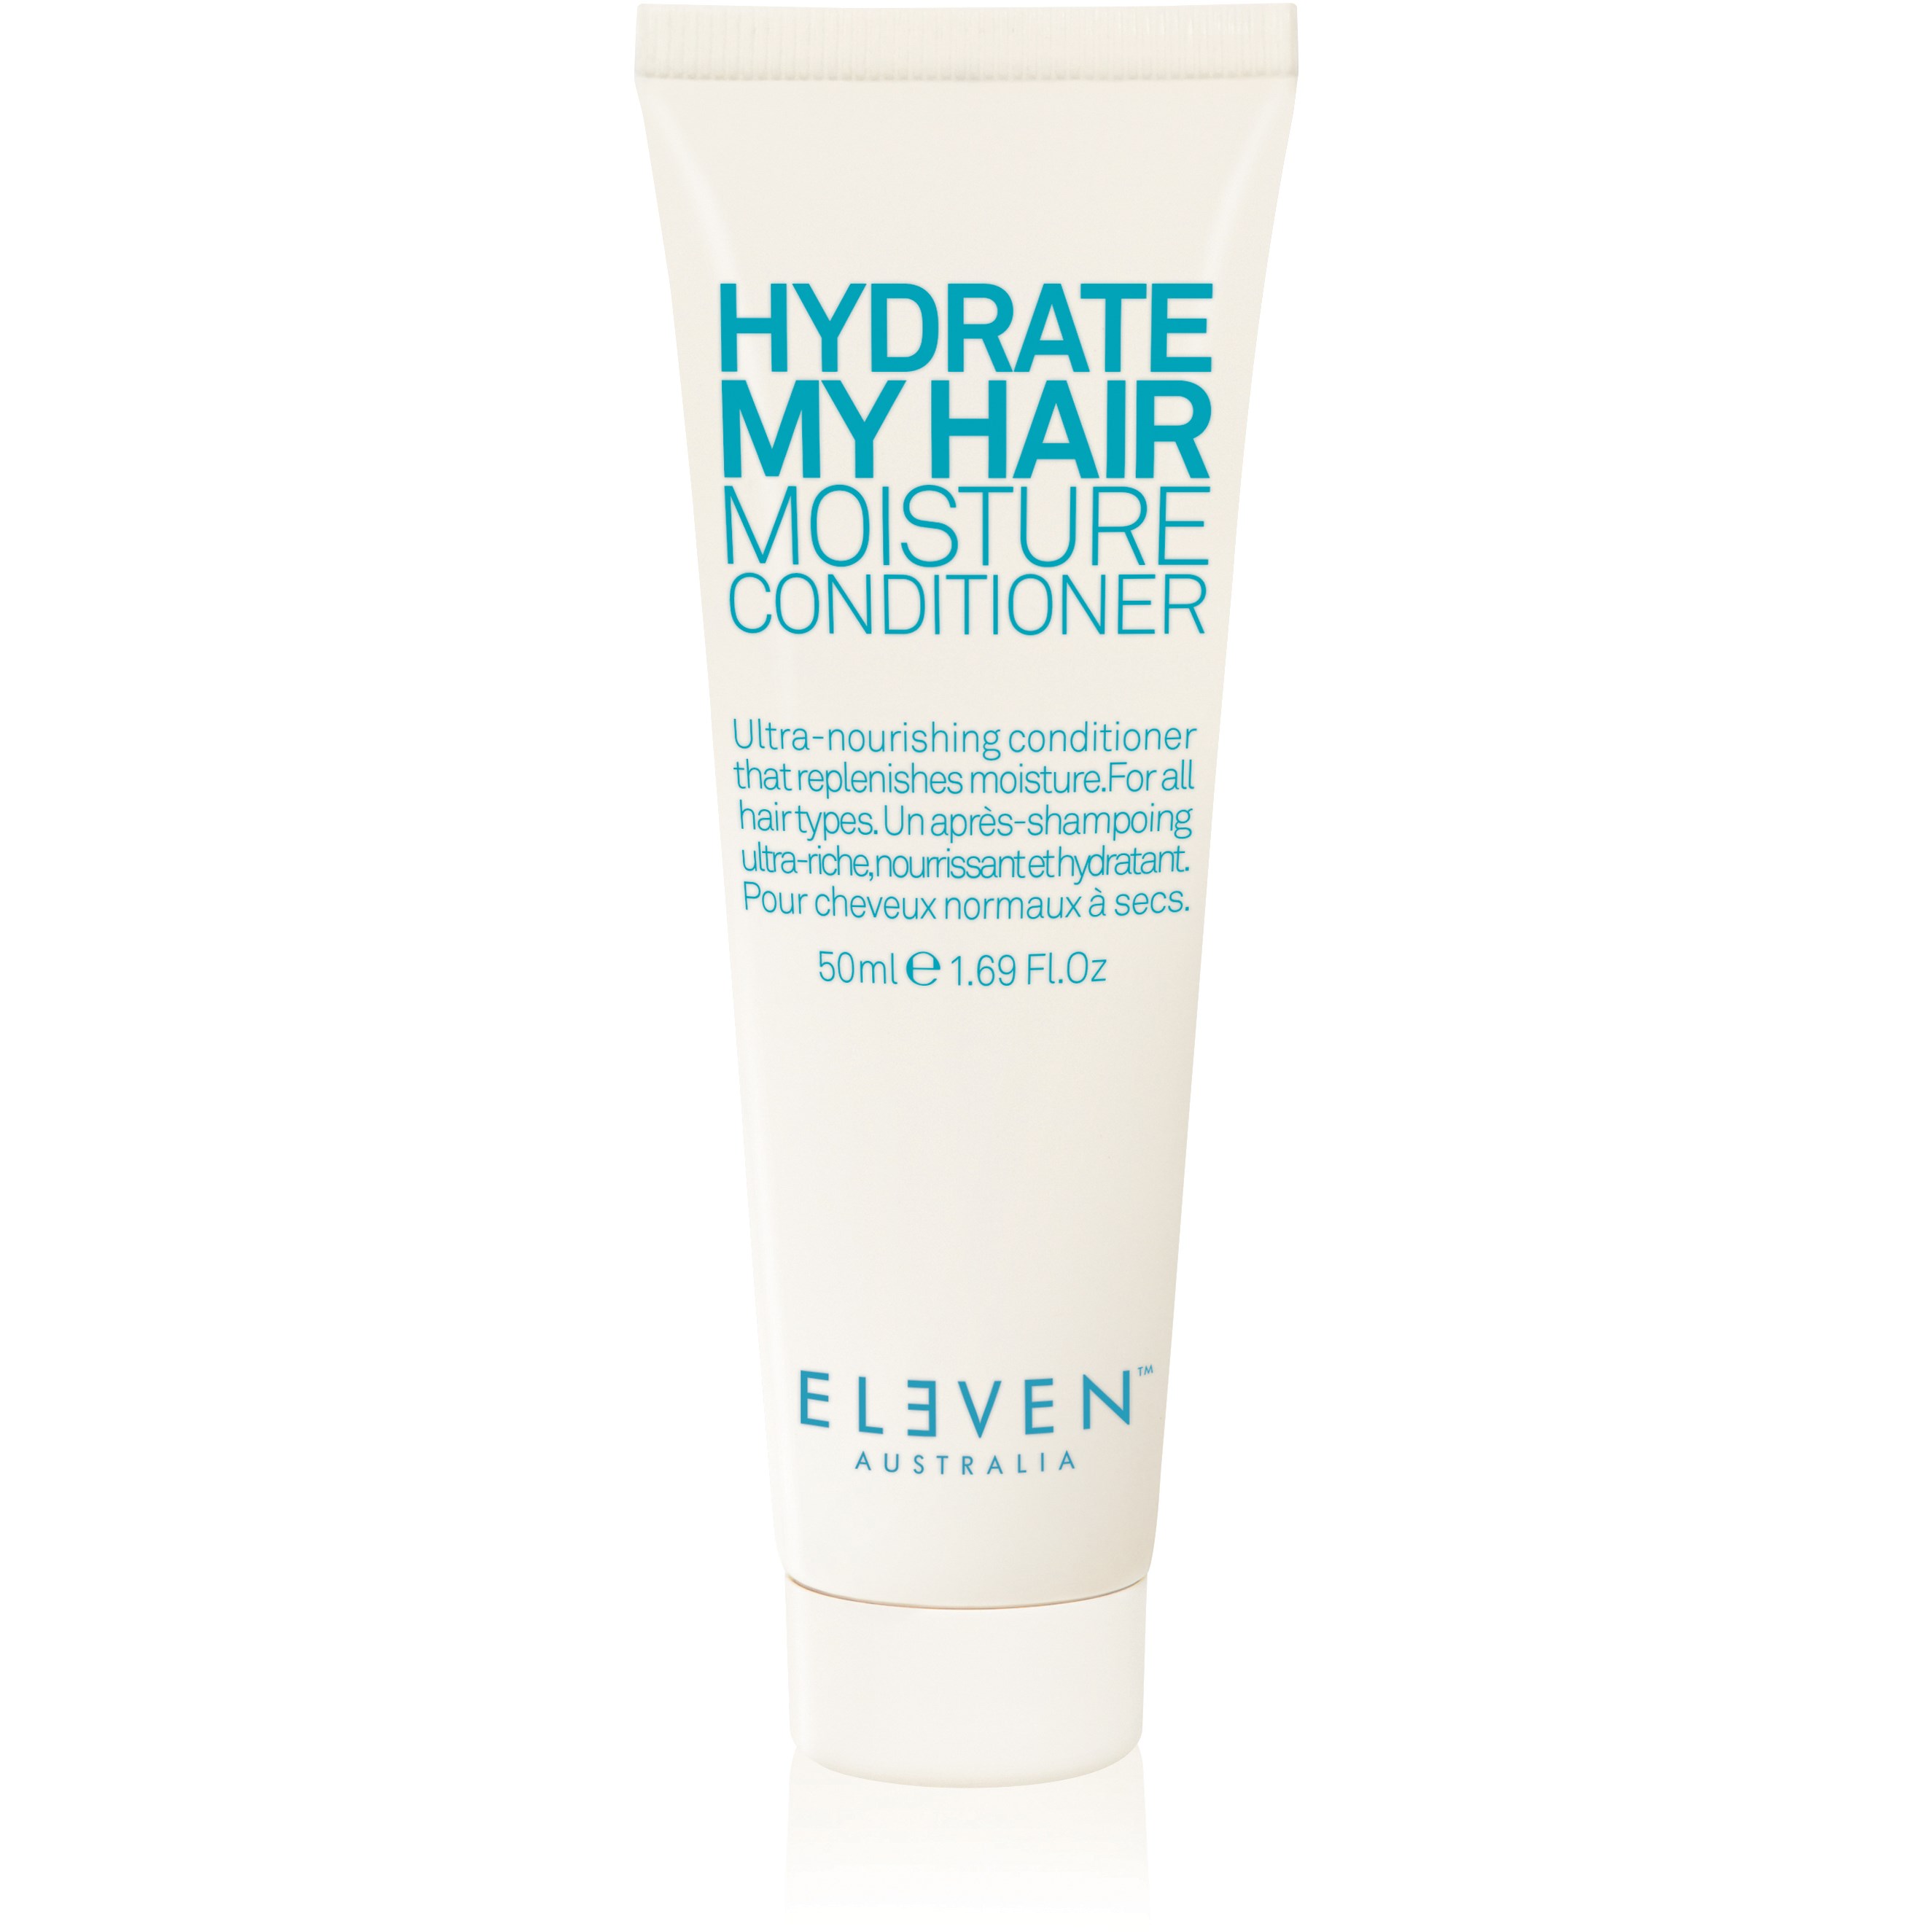 Eleven Australia Hydrate My Hair Moisture Conditioner, 50 ml